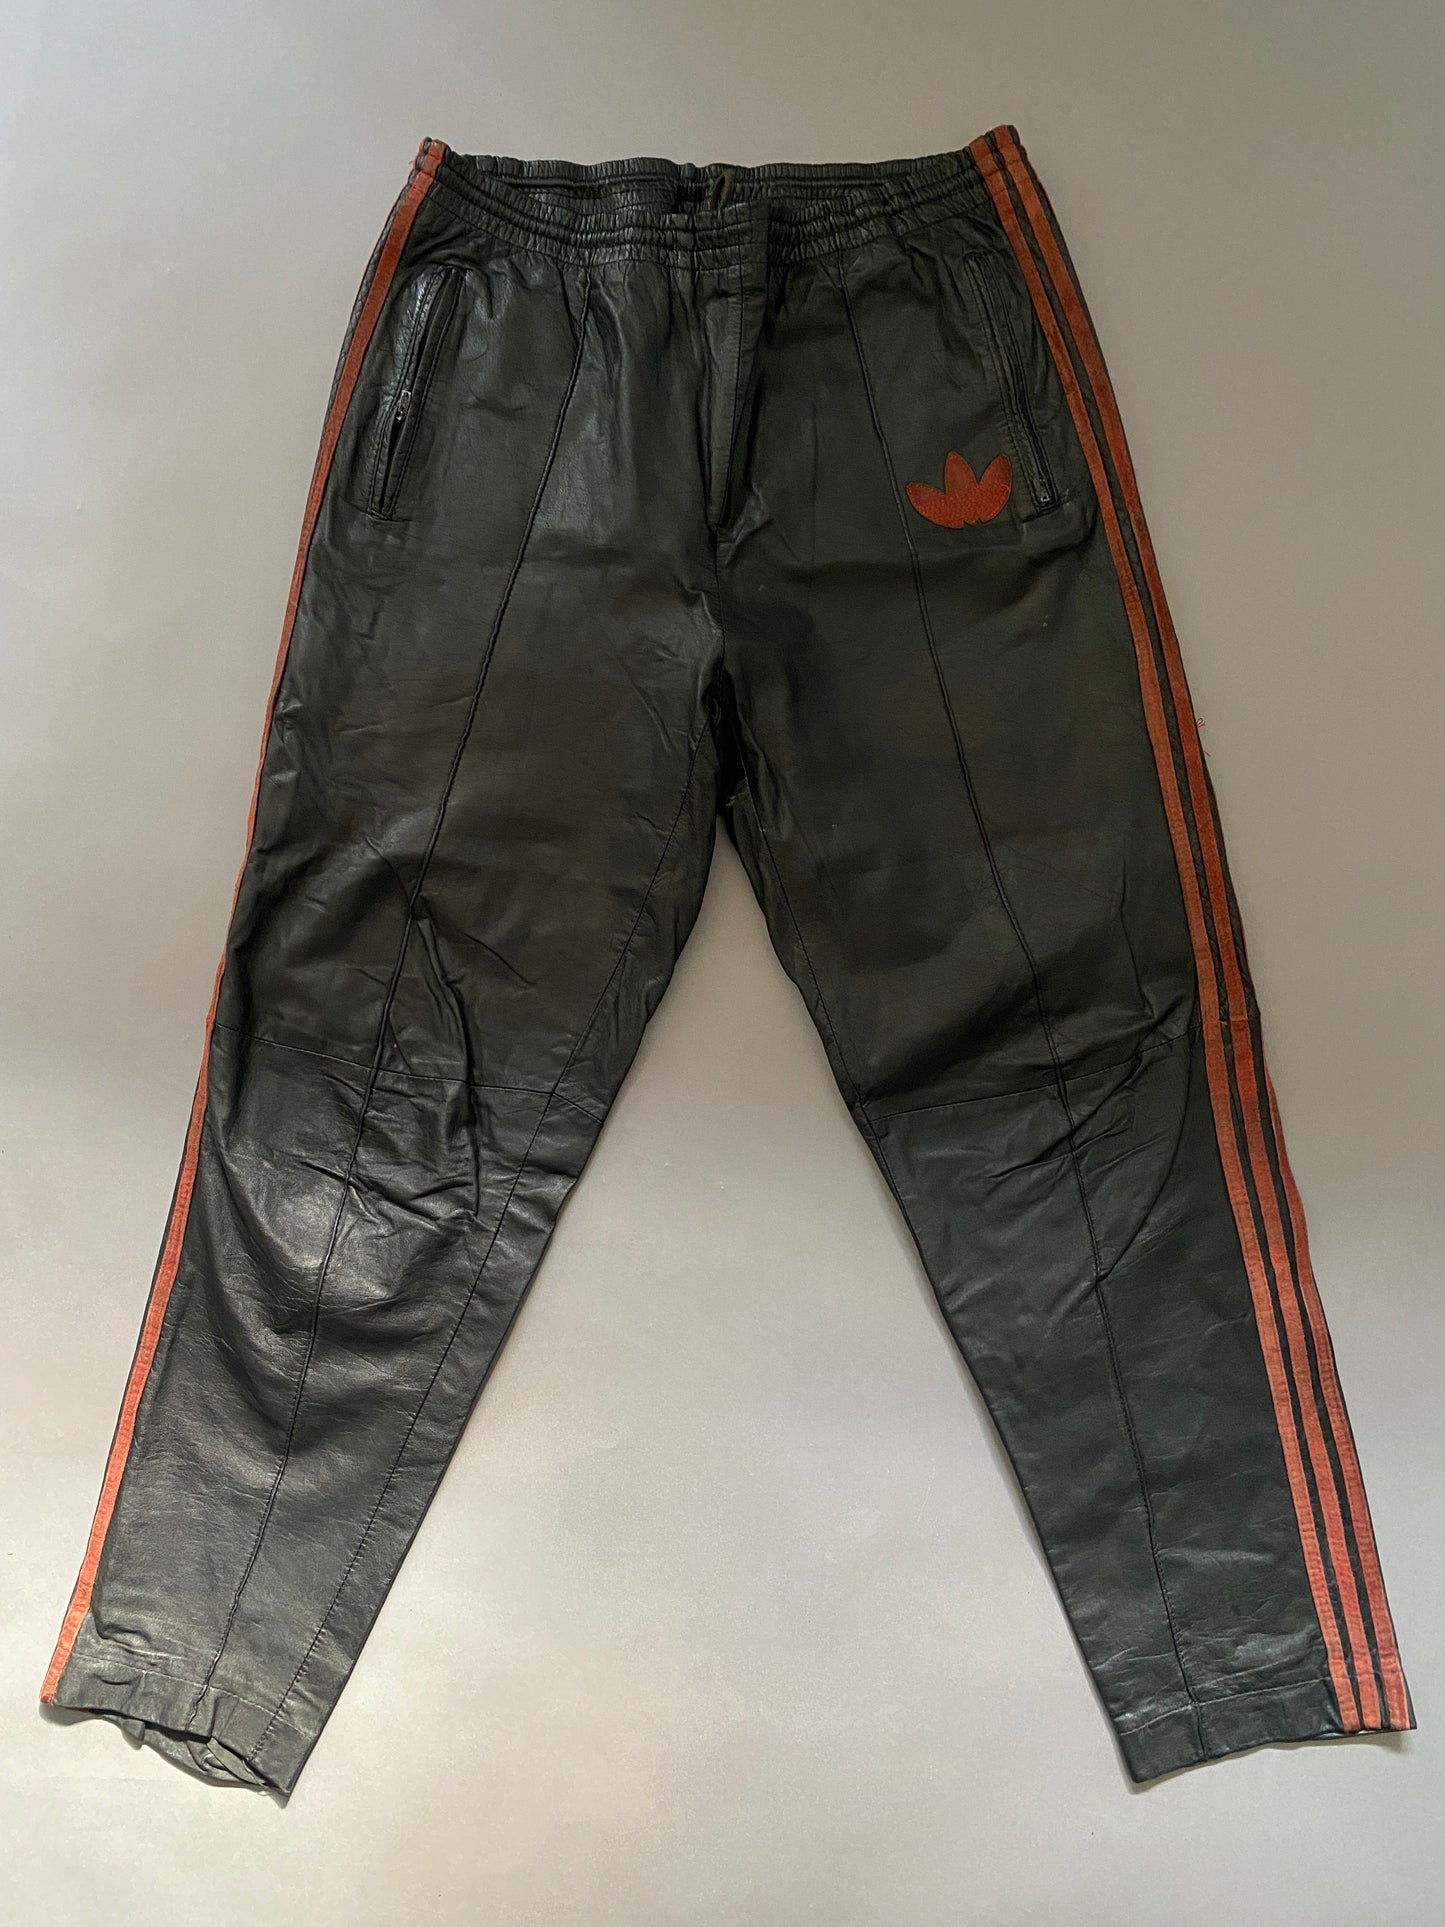 Adidas Leather Trackpants 80’s Vintage